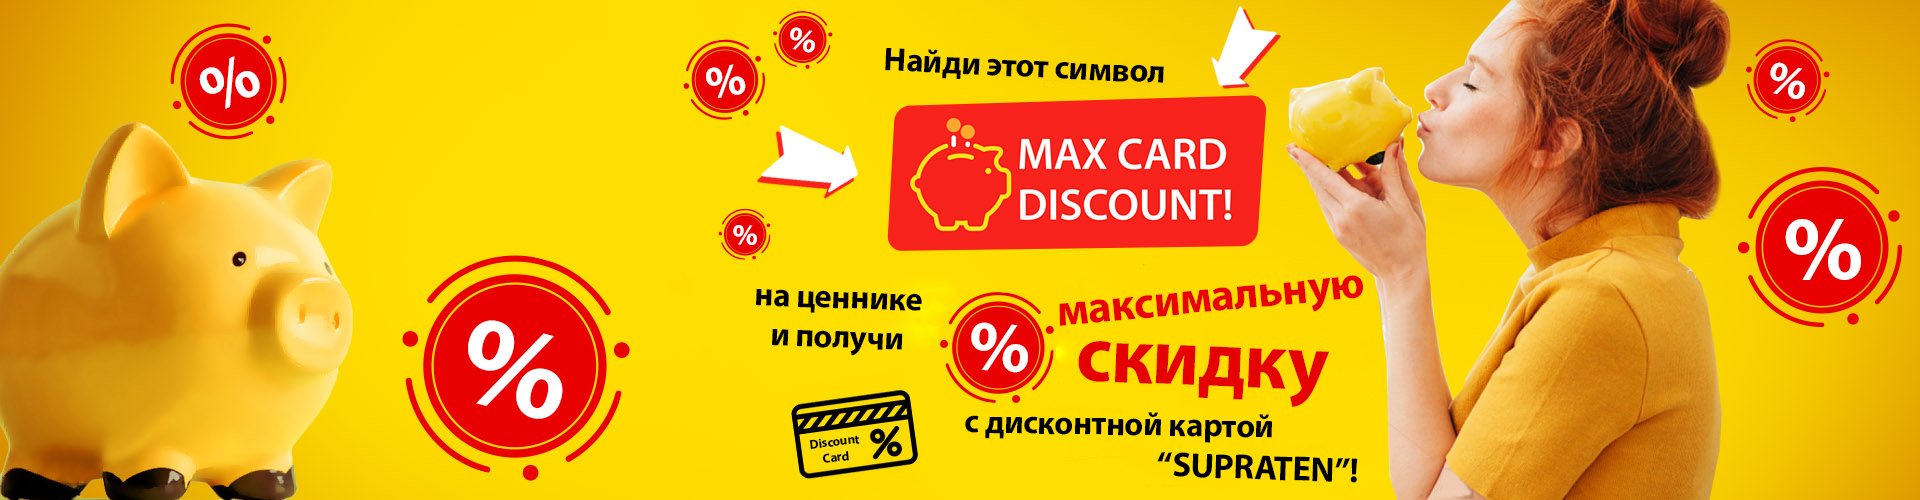 Max Card Discount